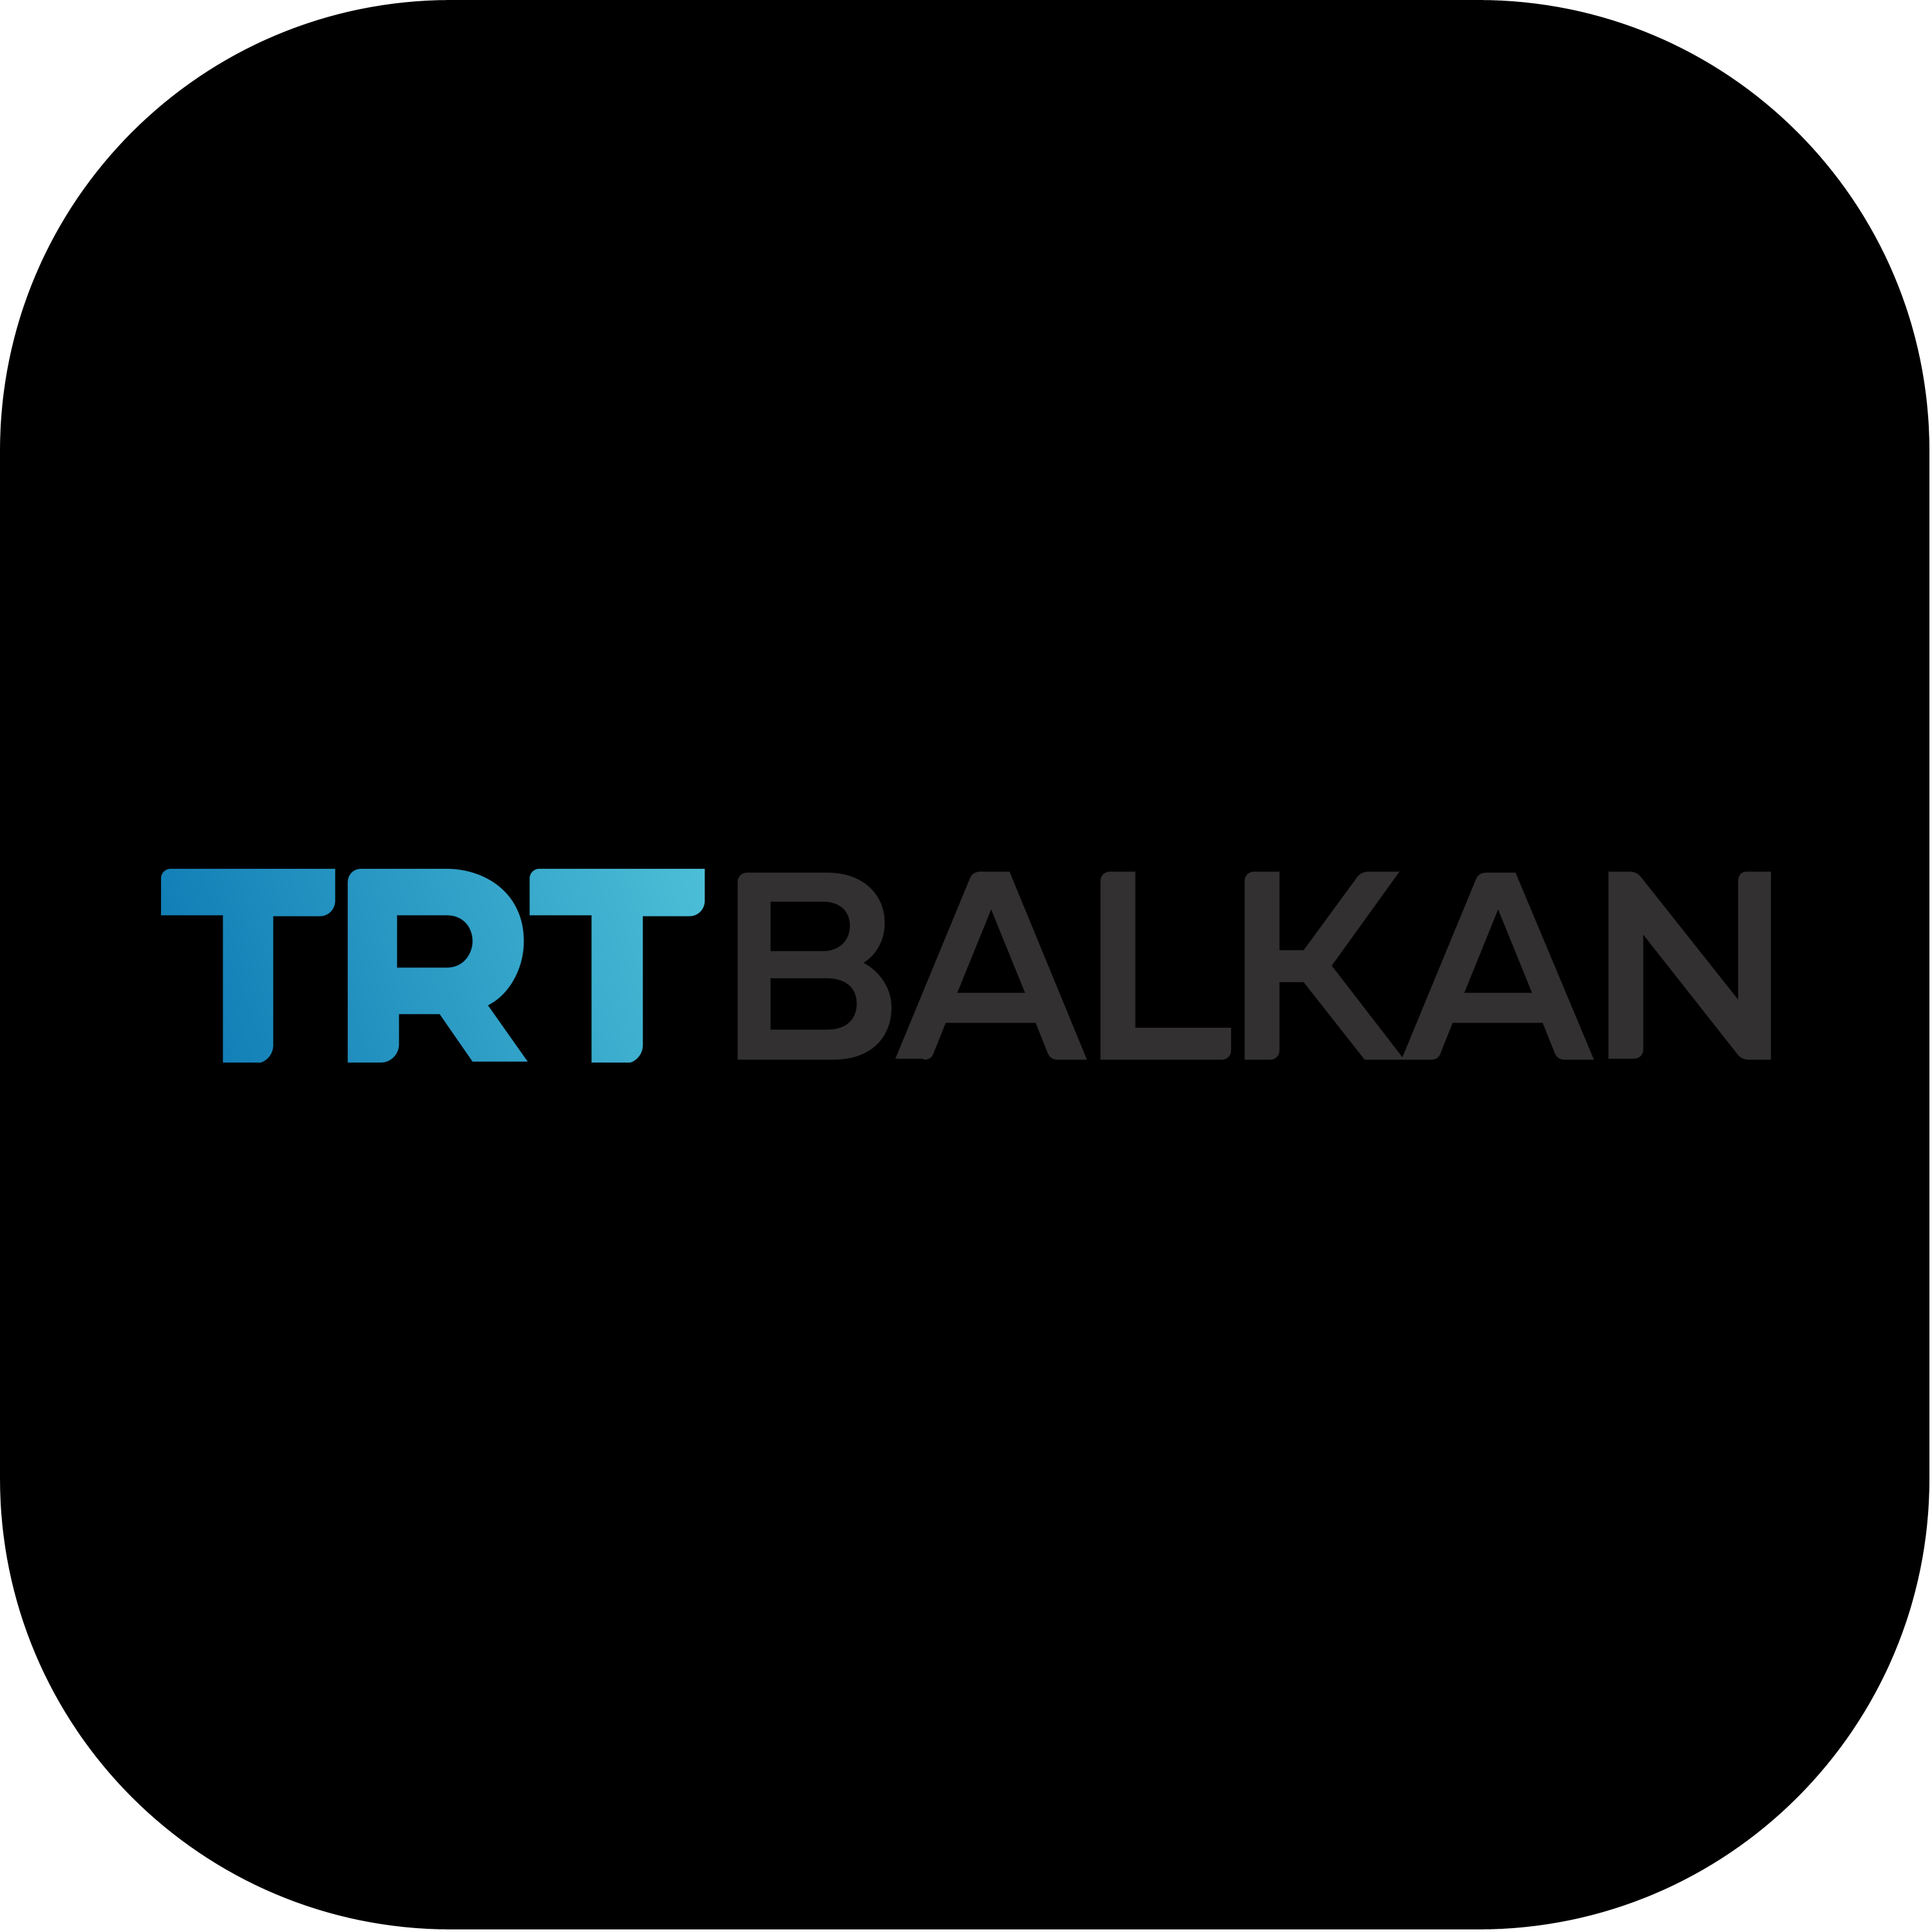 TRT Balkan Logo Transparent Photo